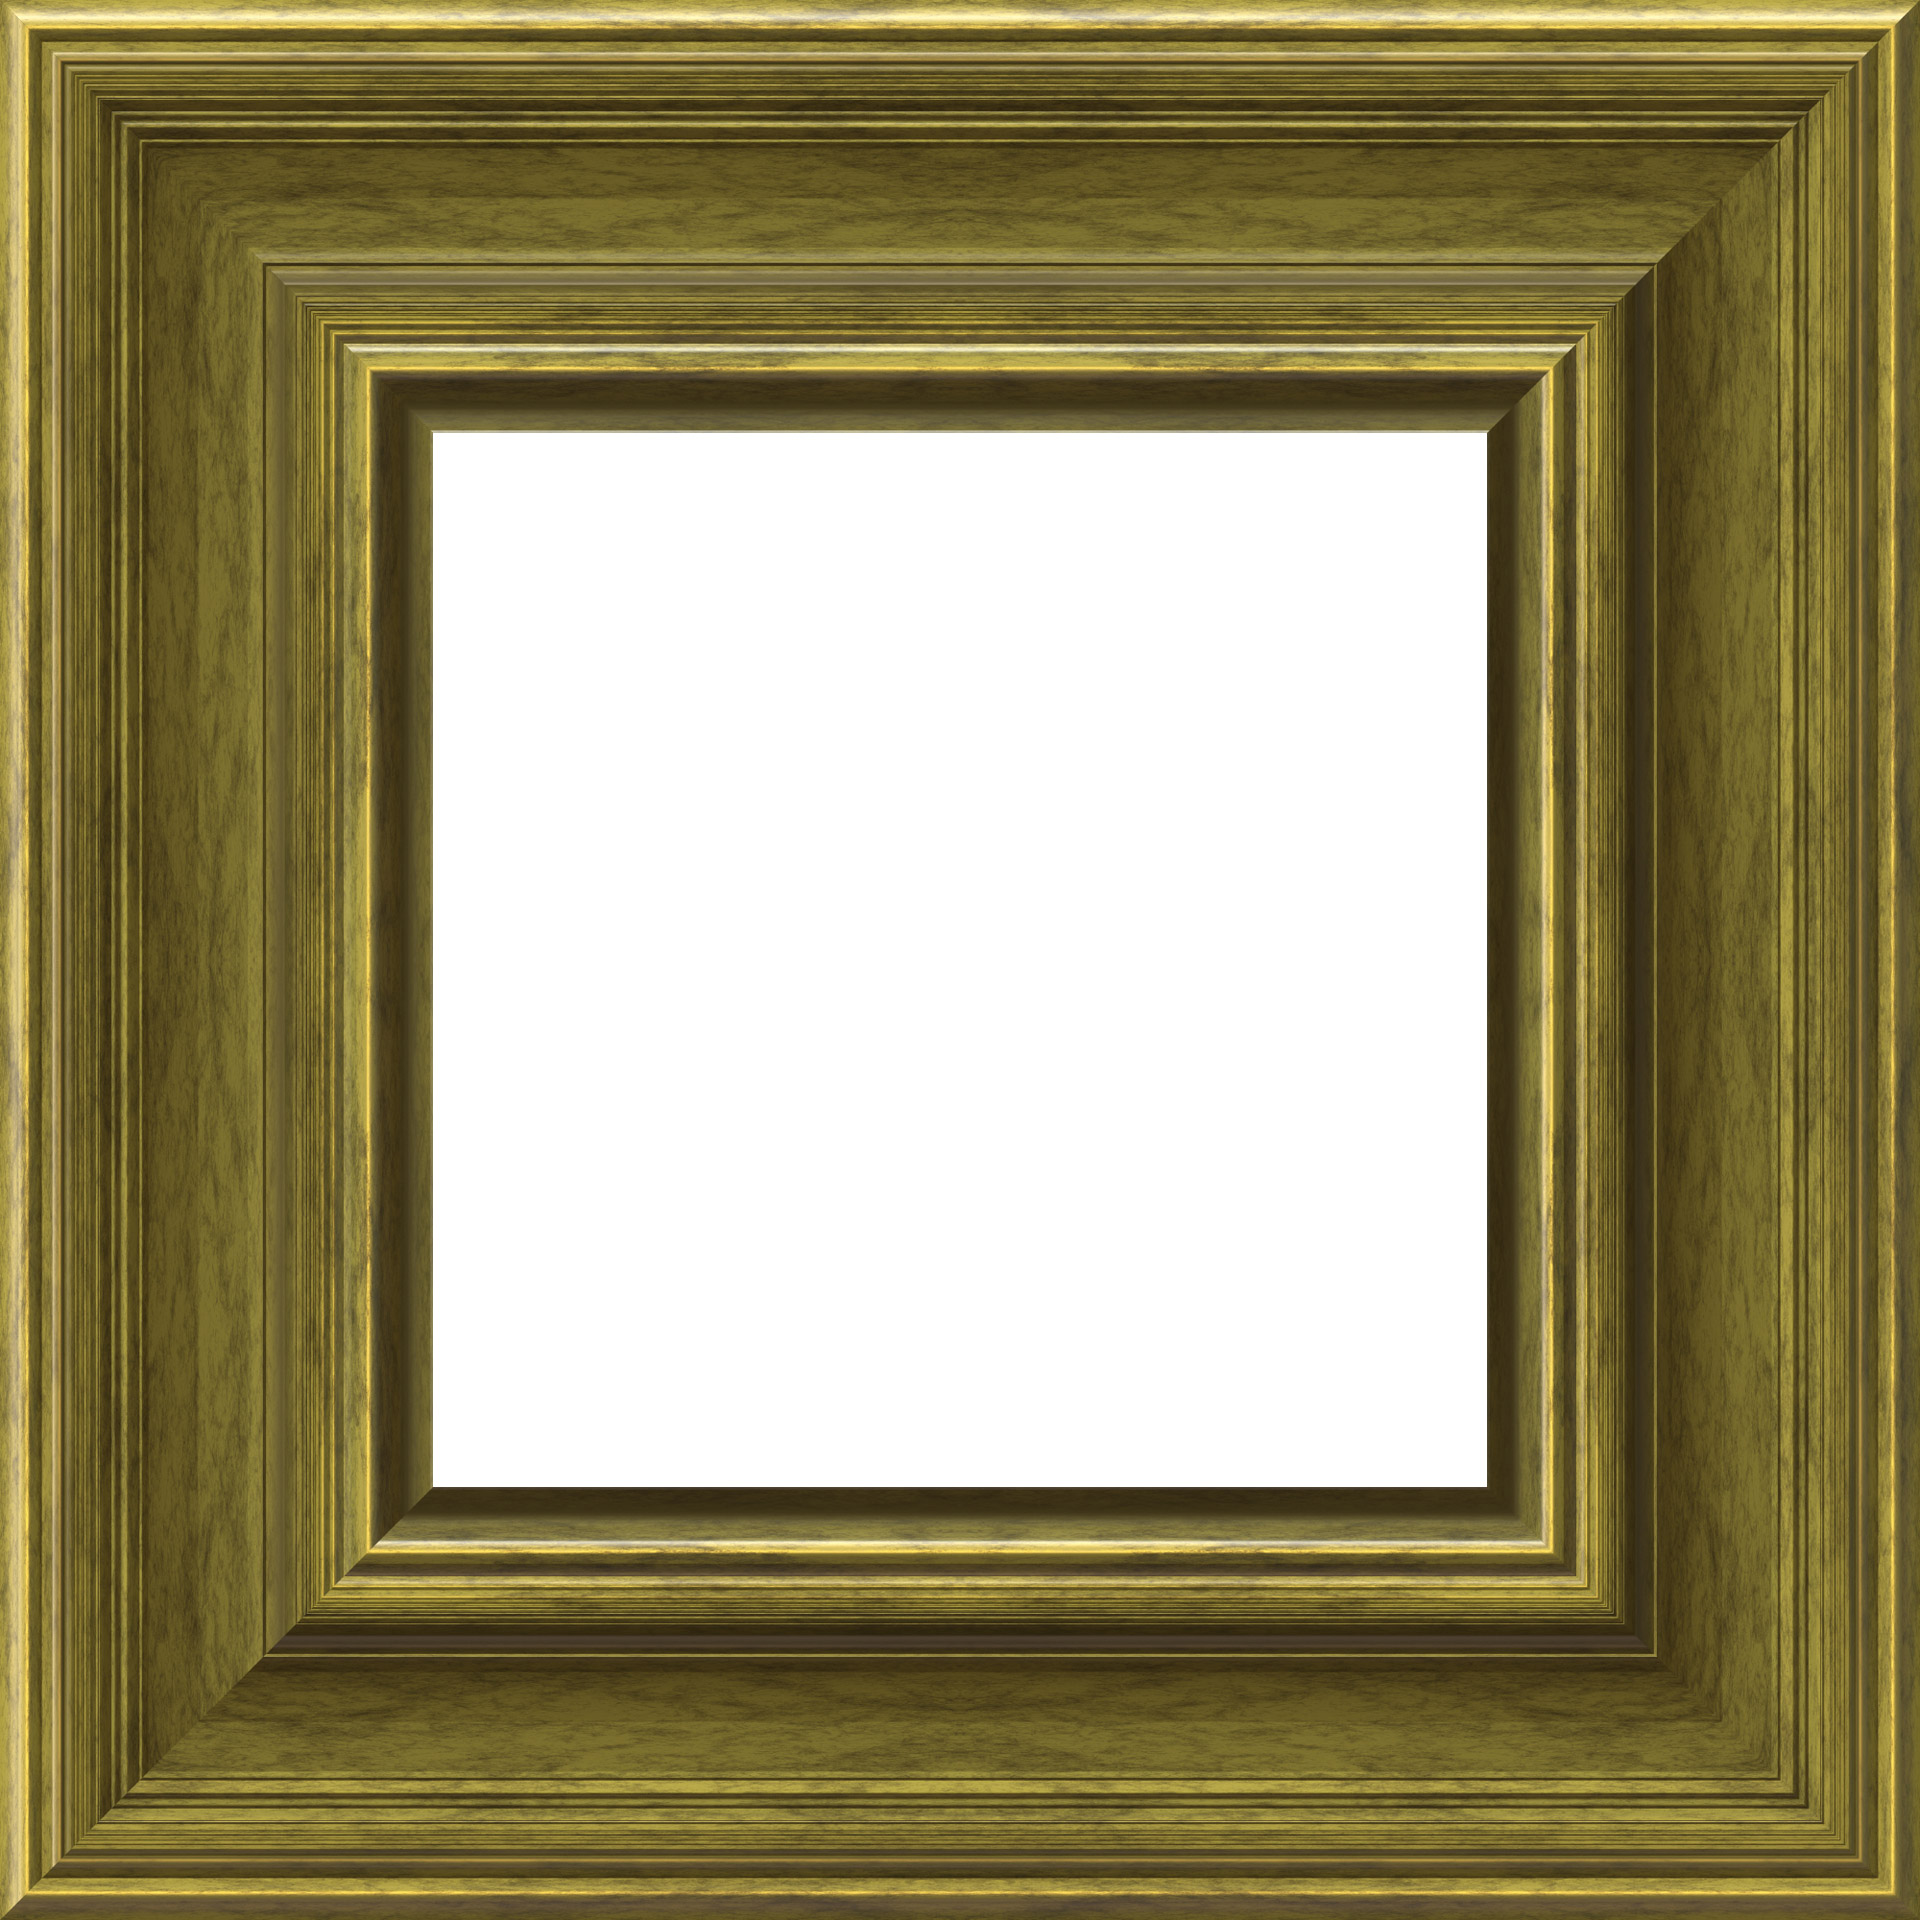 A nice golden wood textured frame...2000x2000 pixels